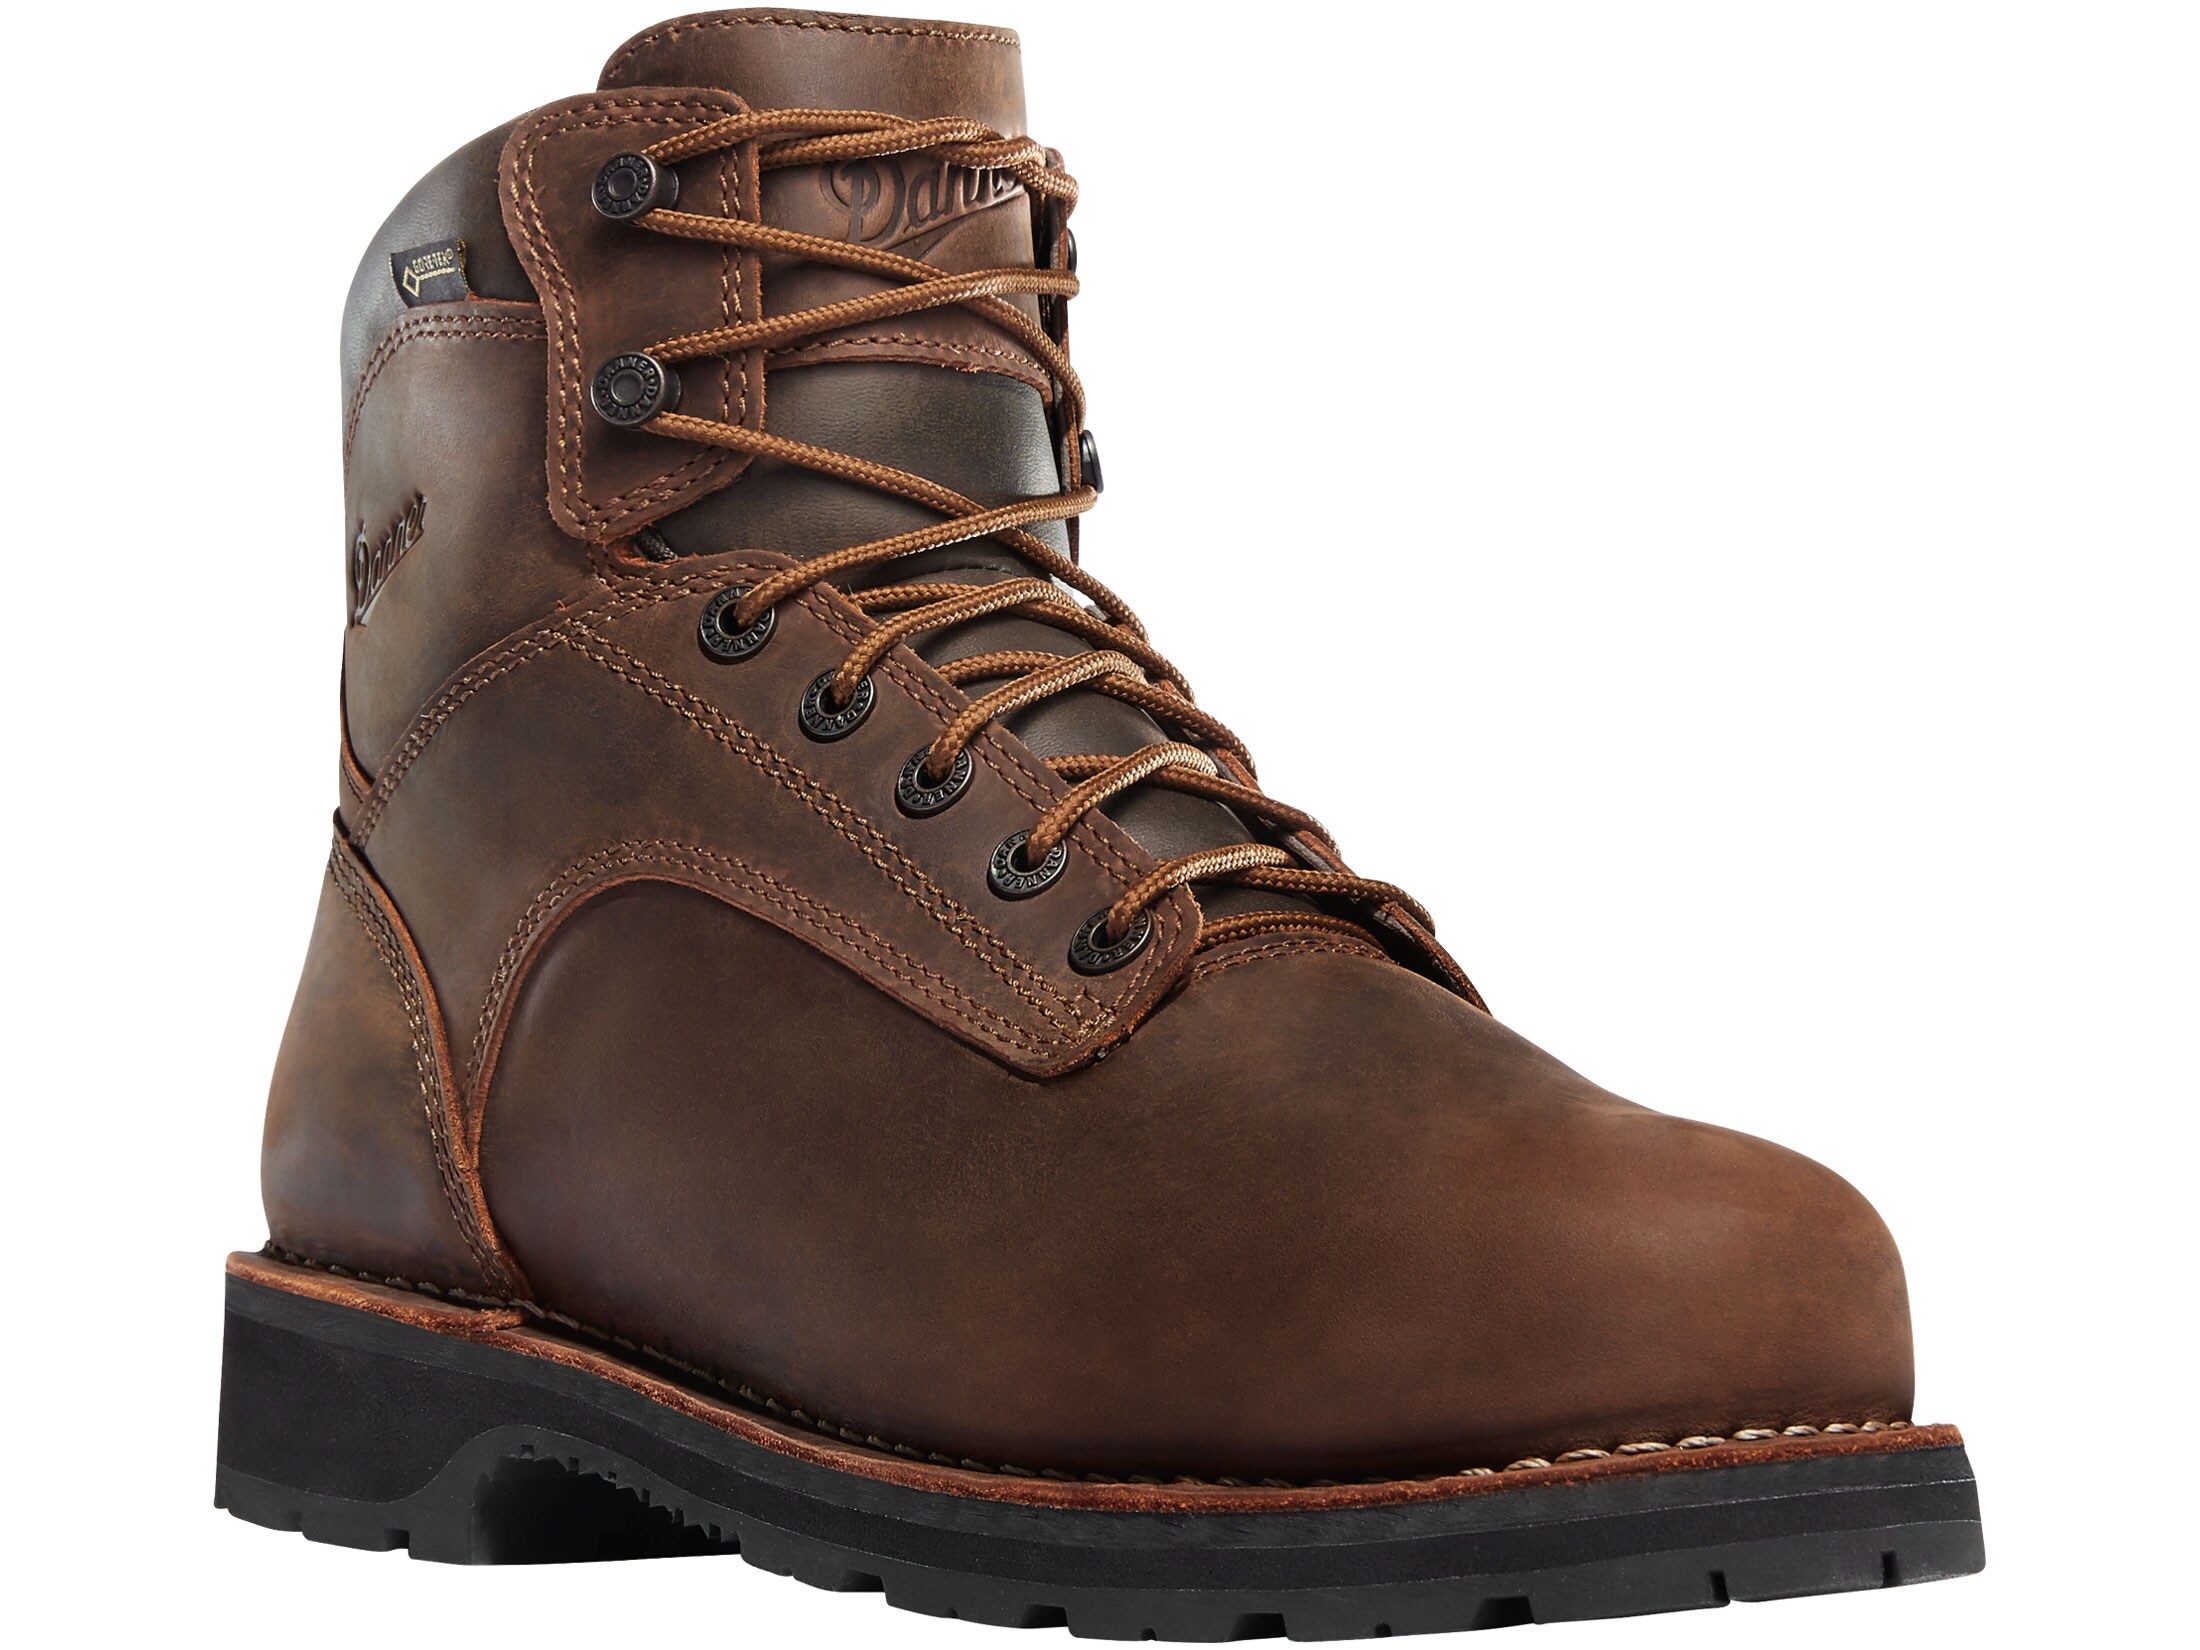 Danner Workman 6 GORE-TEX Aluminum Toe Work Boots Leather Brown Men's